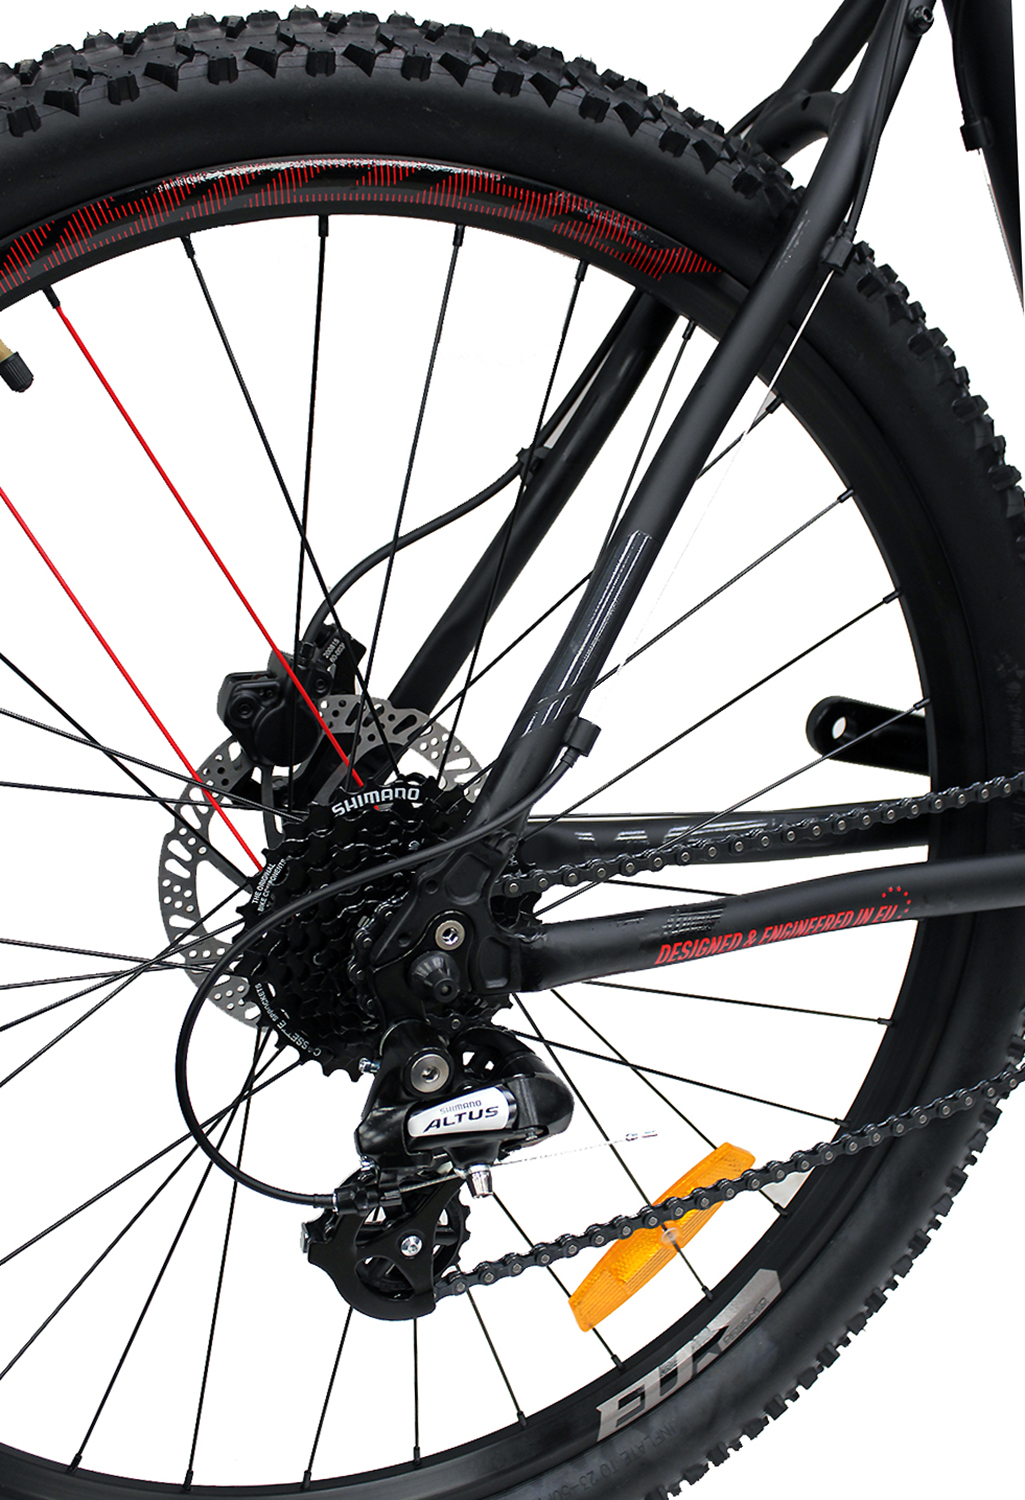 Велосипед Welt Ridge 2.0 HD SST 29 2021 Matt black